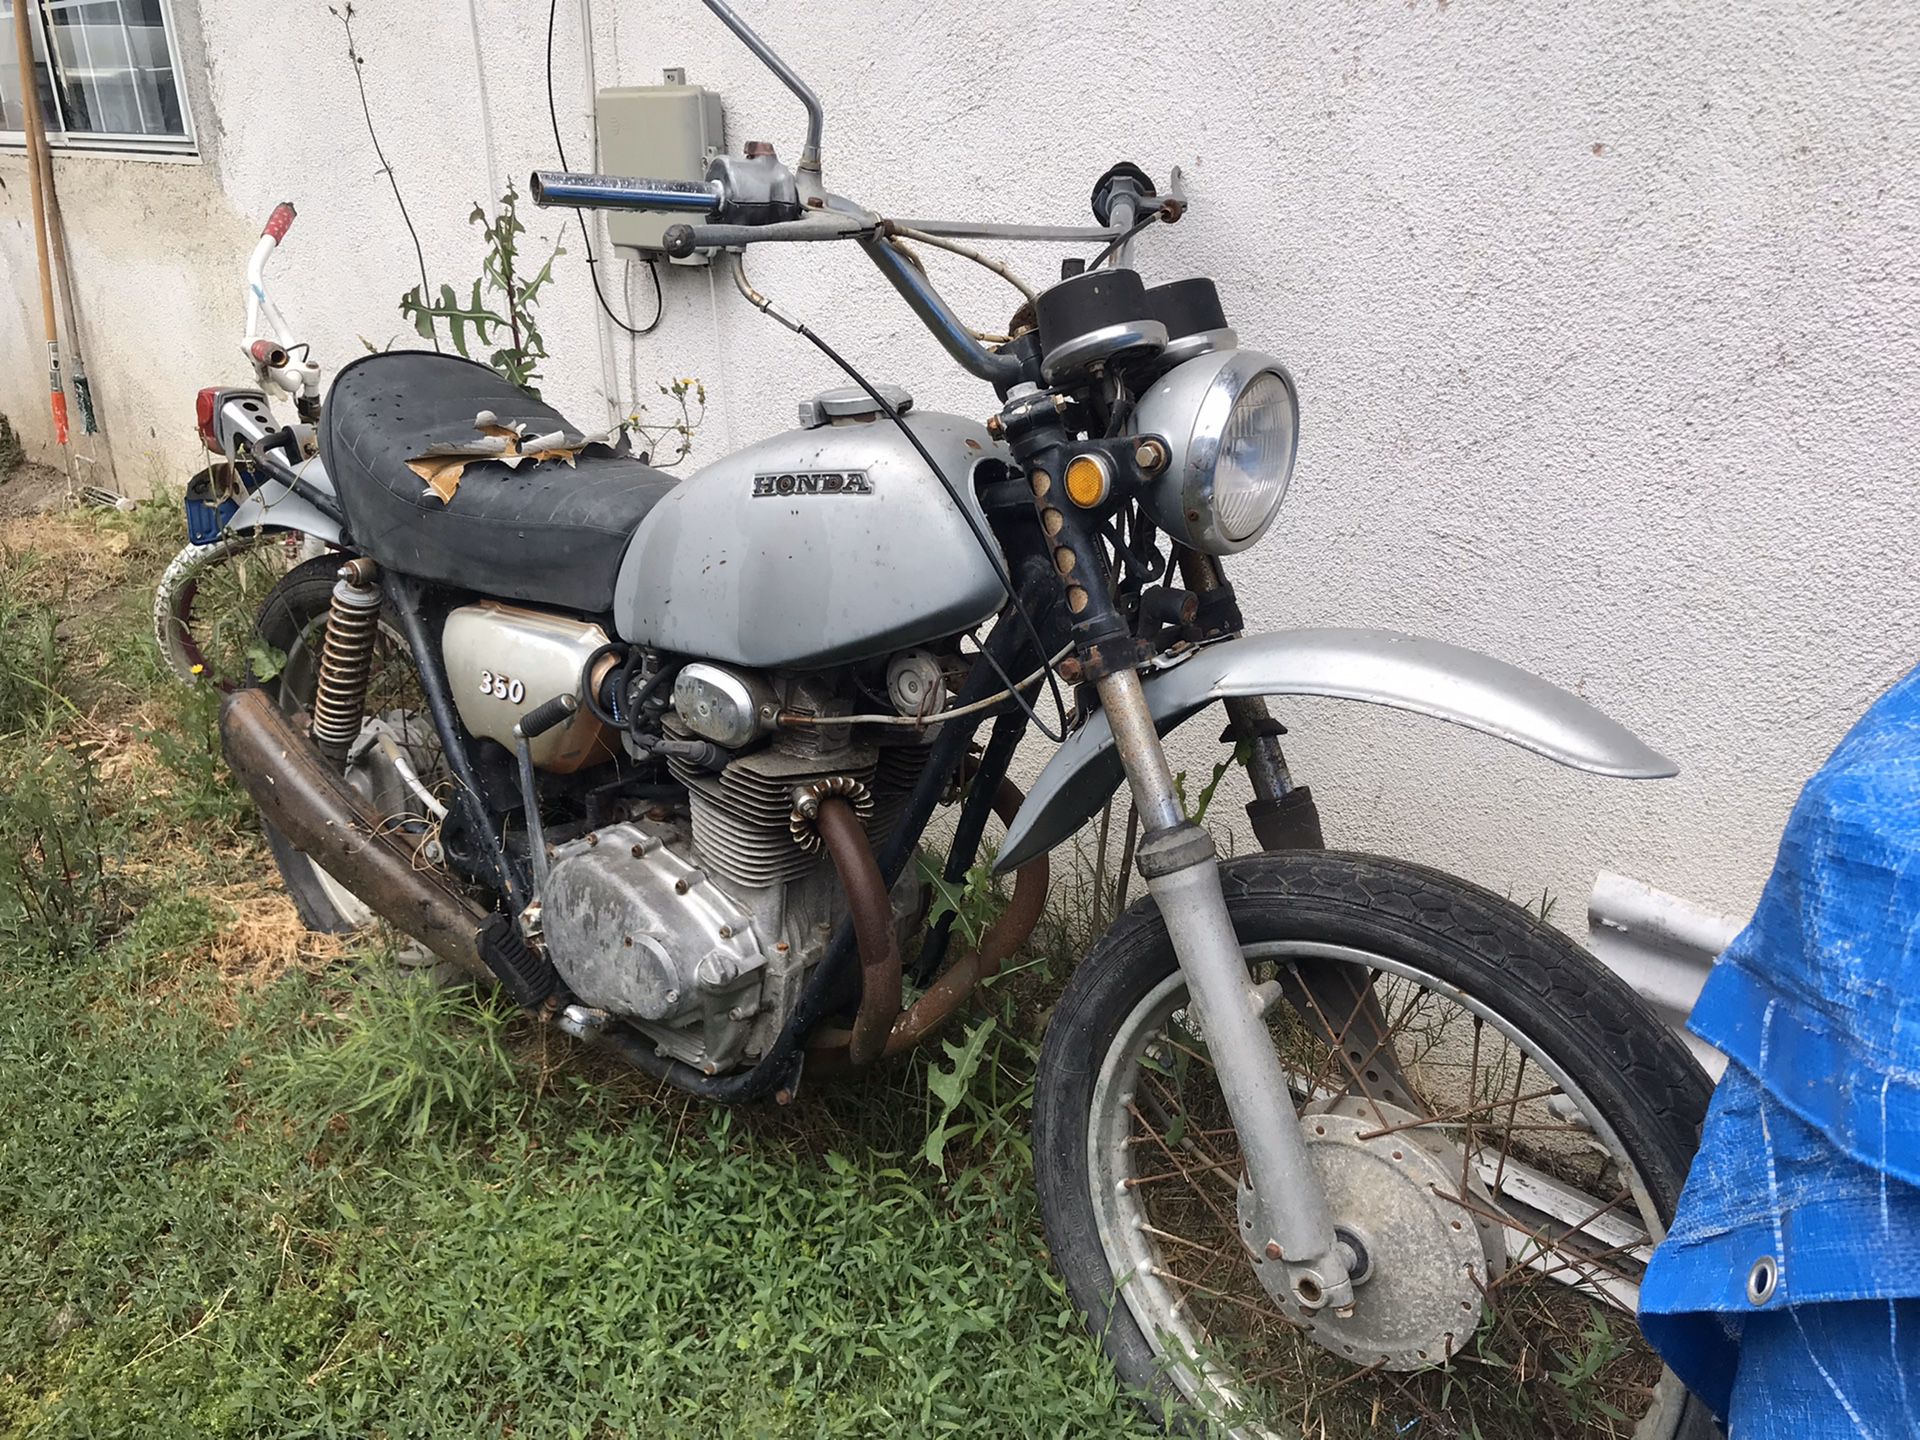 1976 Honda CB 350 motorcycle